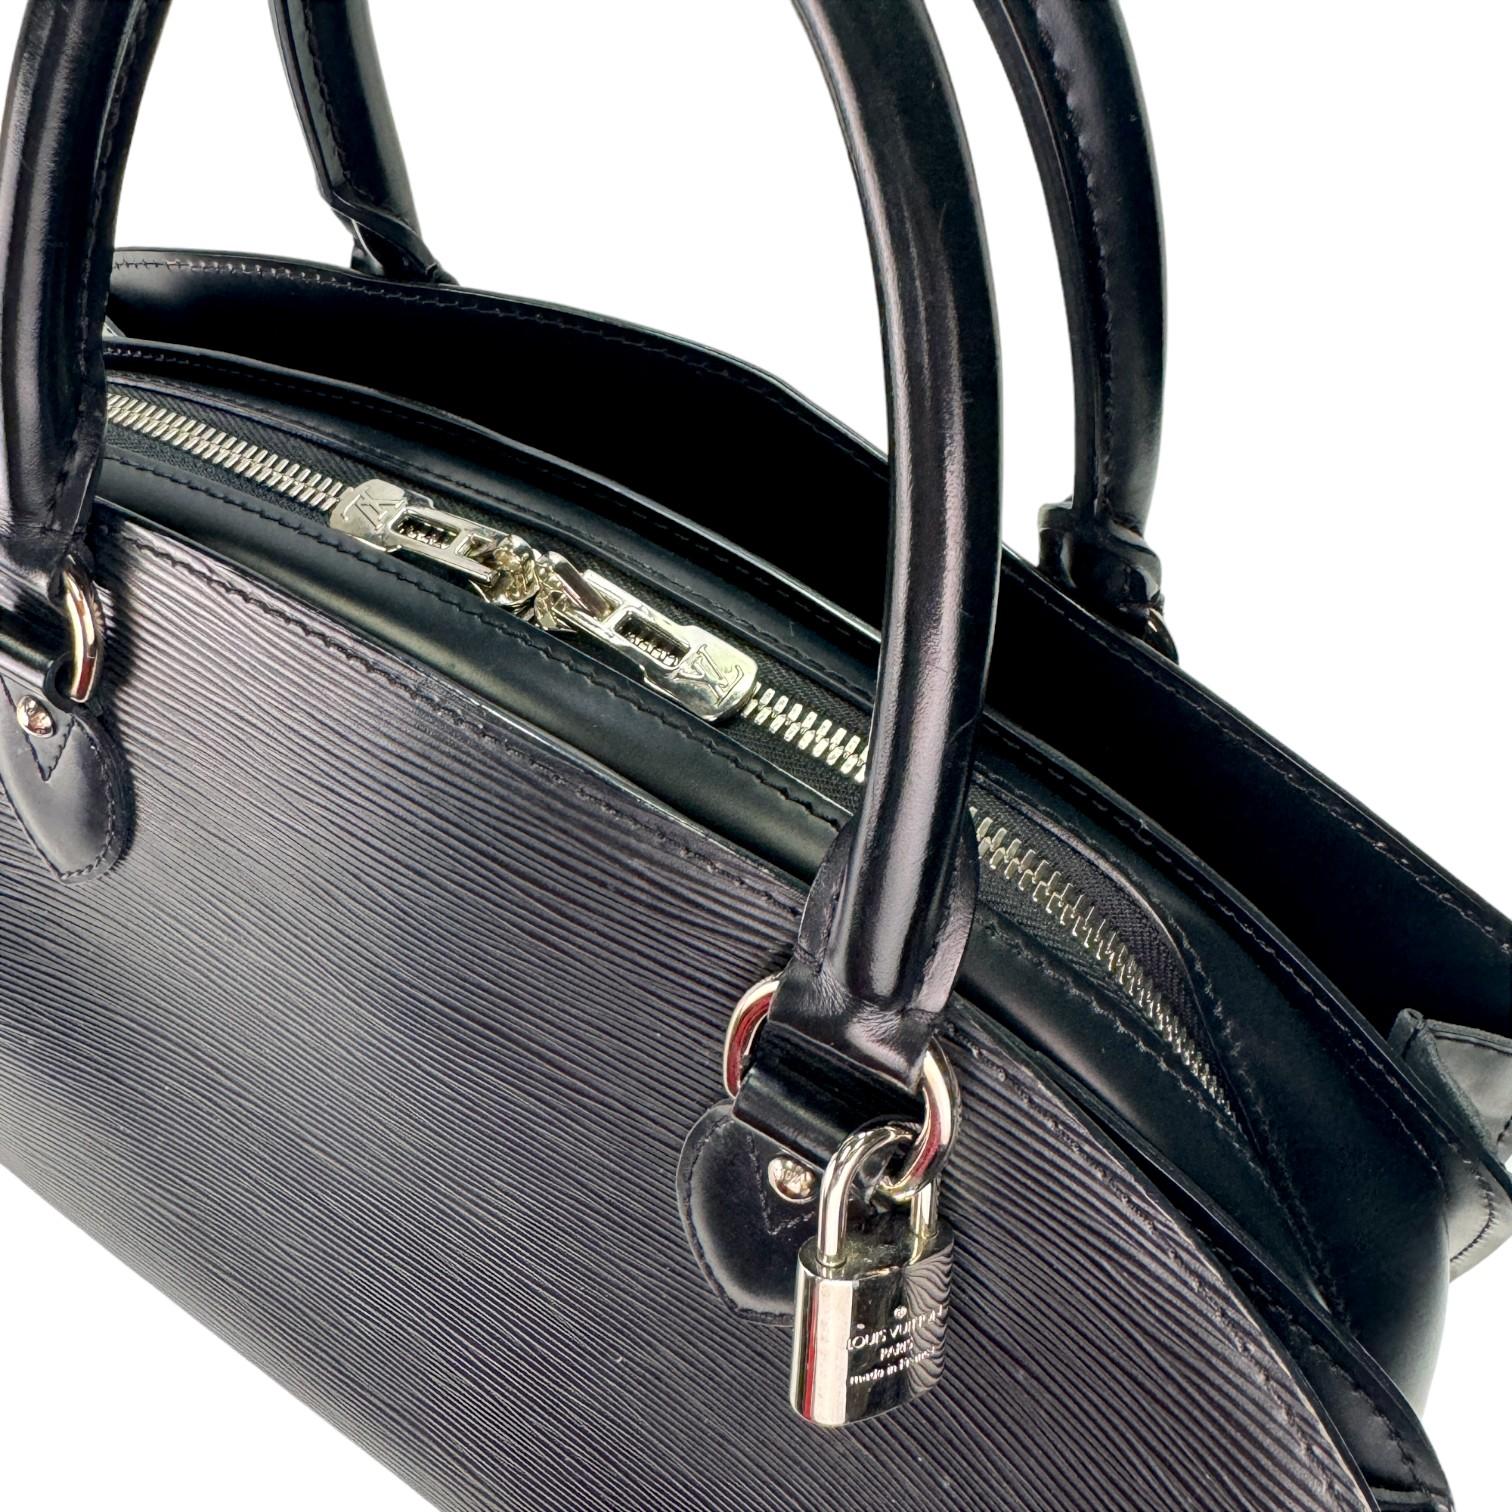 Authentic estate Louis Vuitton Pont-Neuf Black Epi leather bag